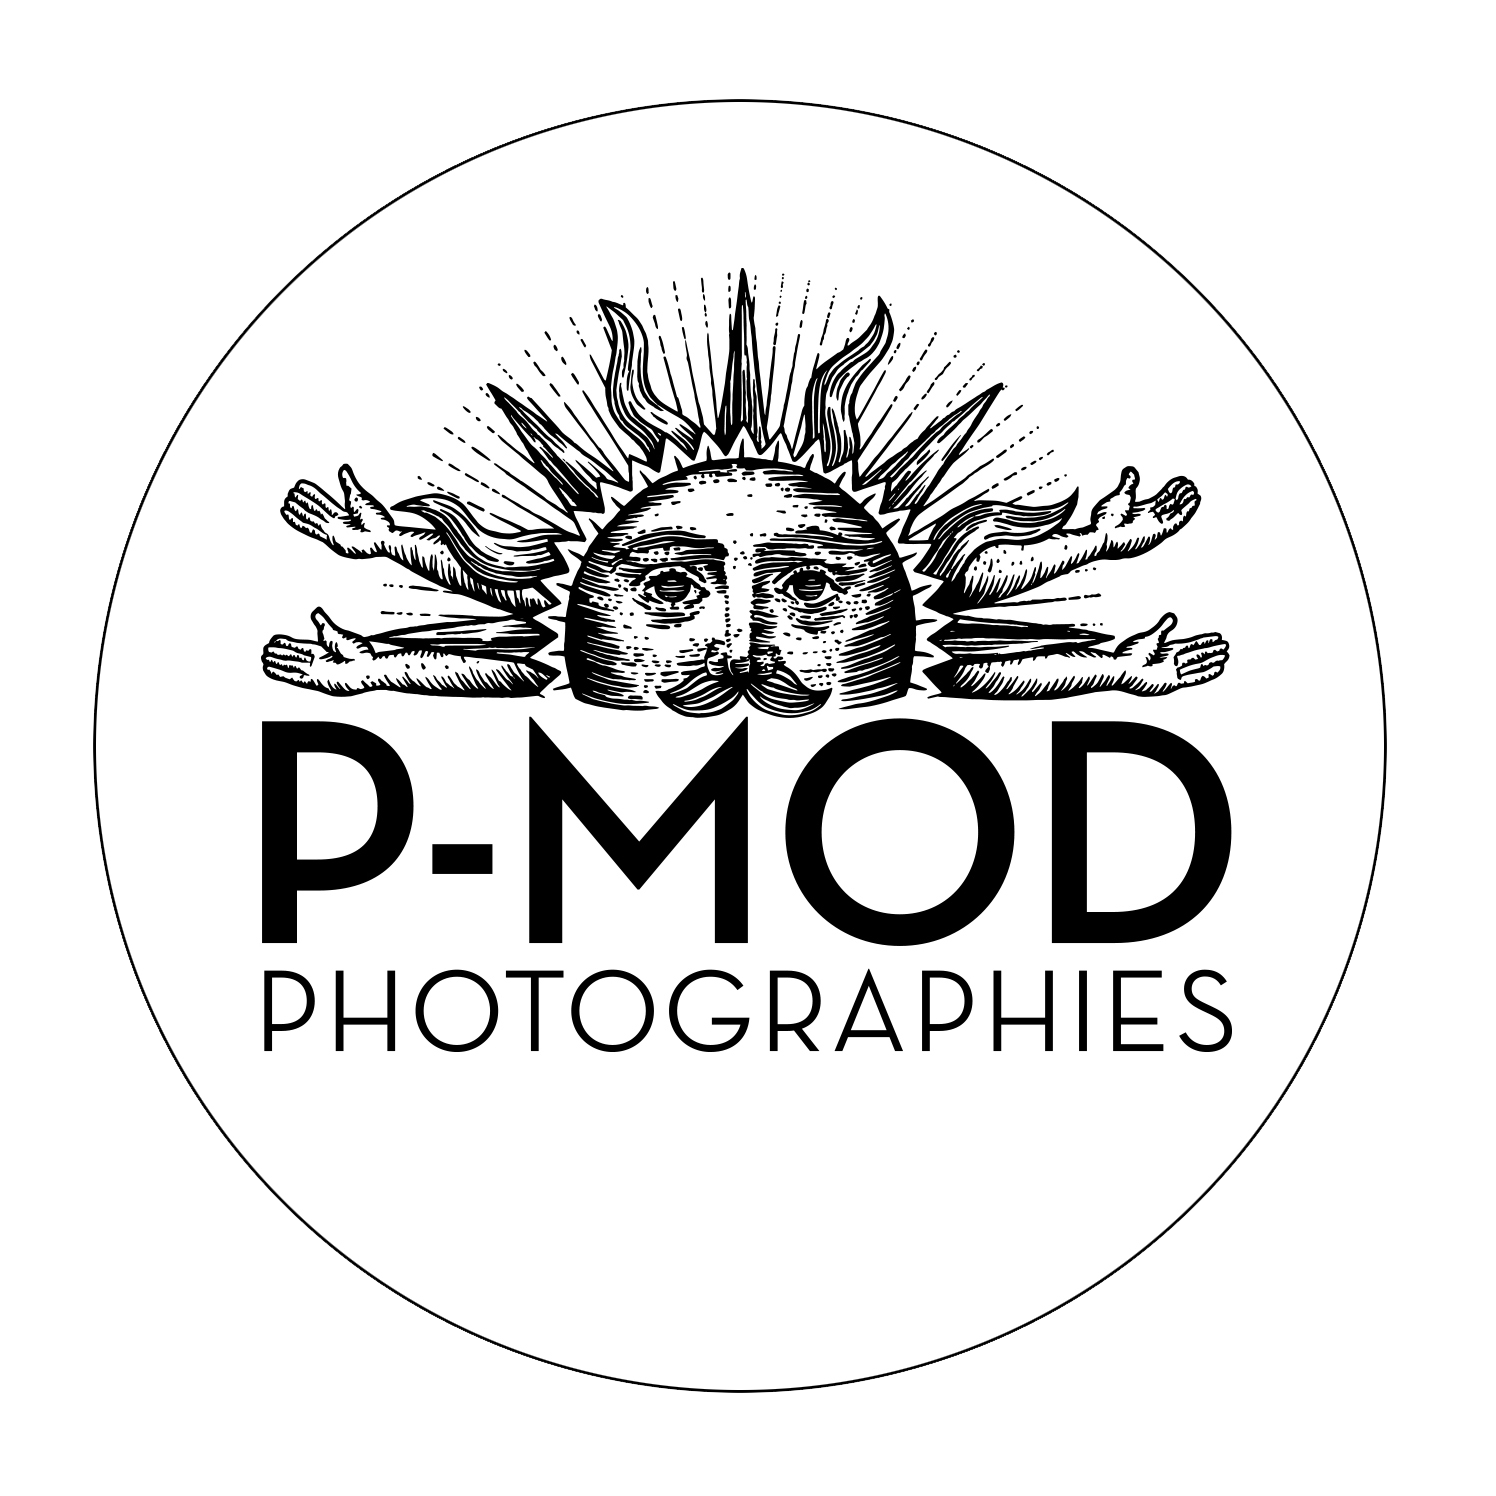 P-mod photographies